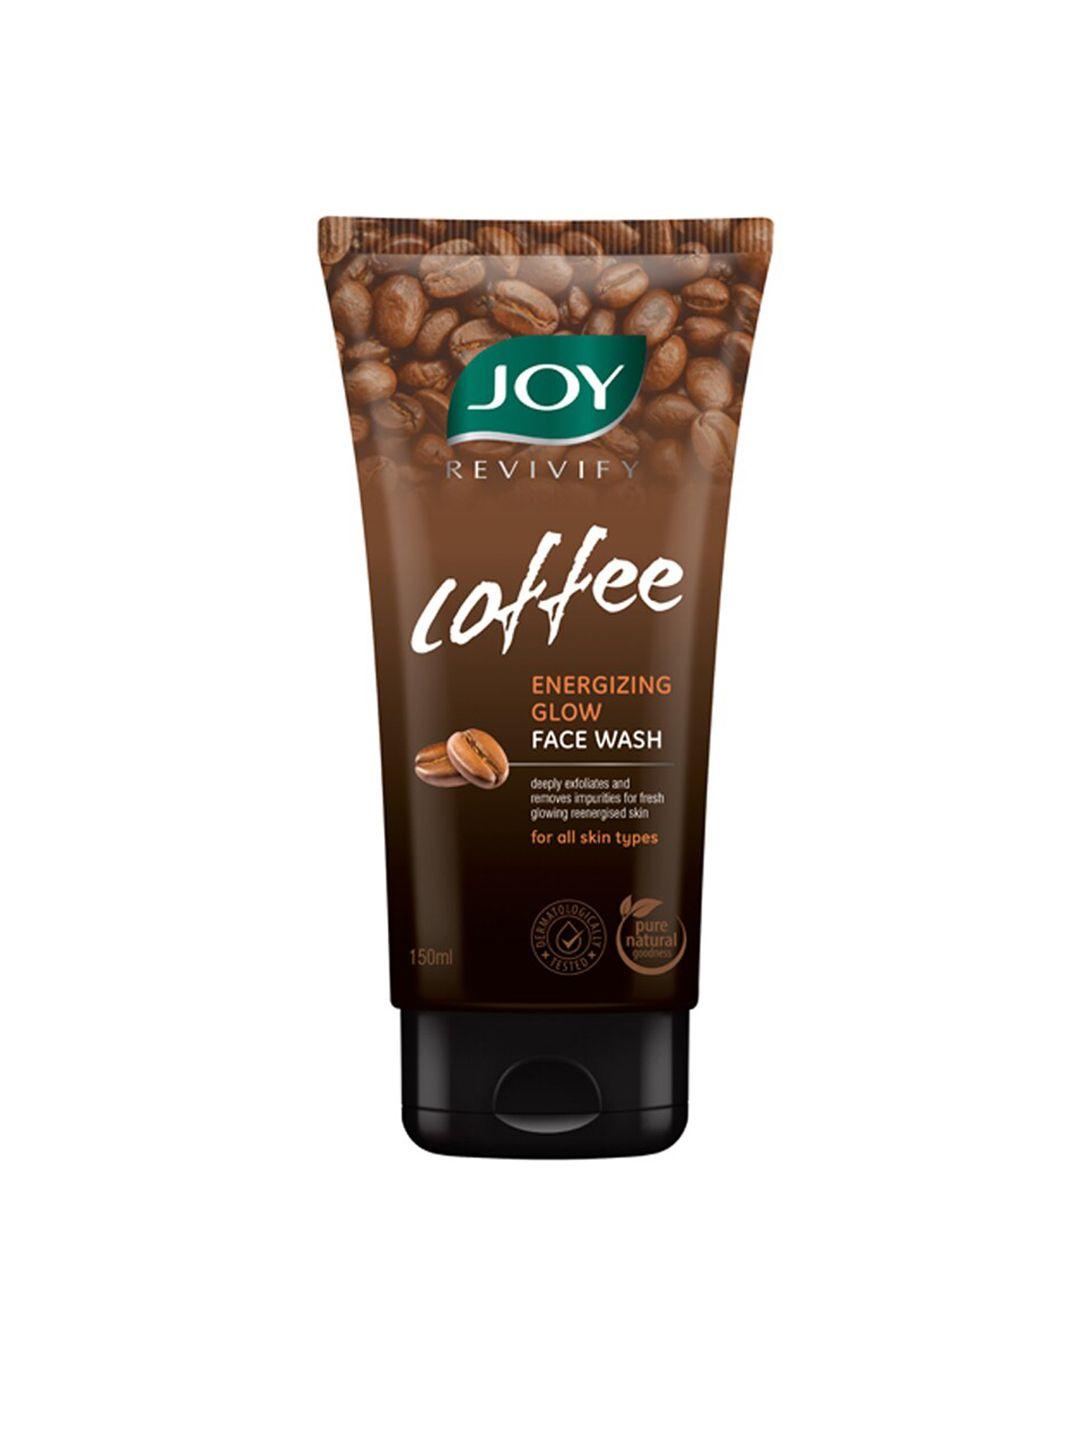 joy revivify energizing glow coffee face wash 150 ml